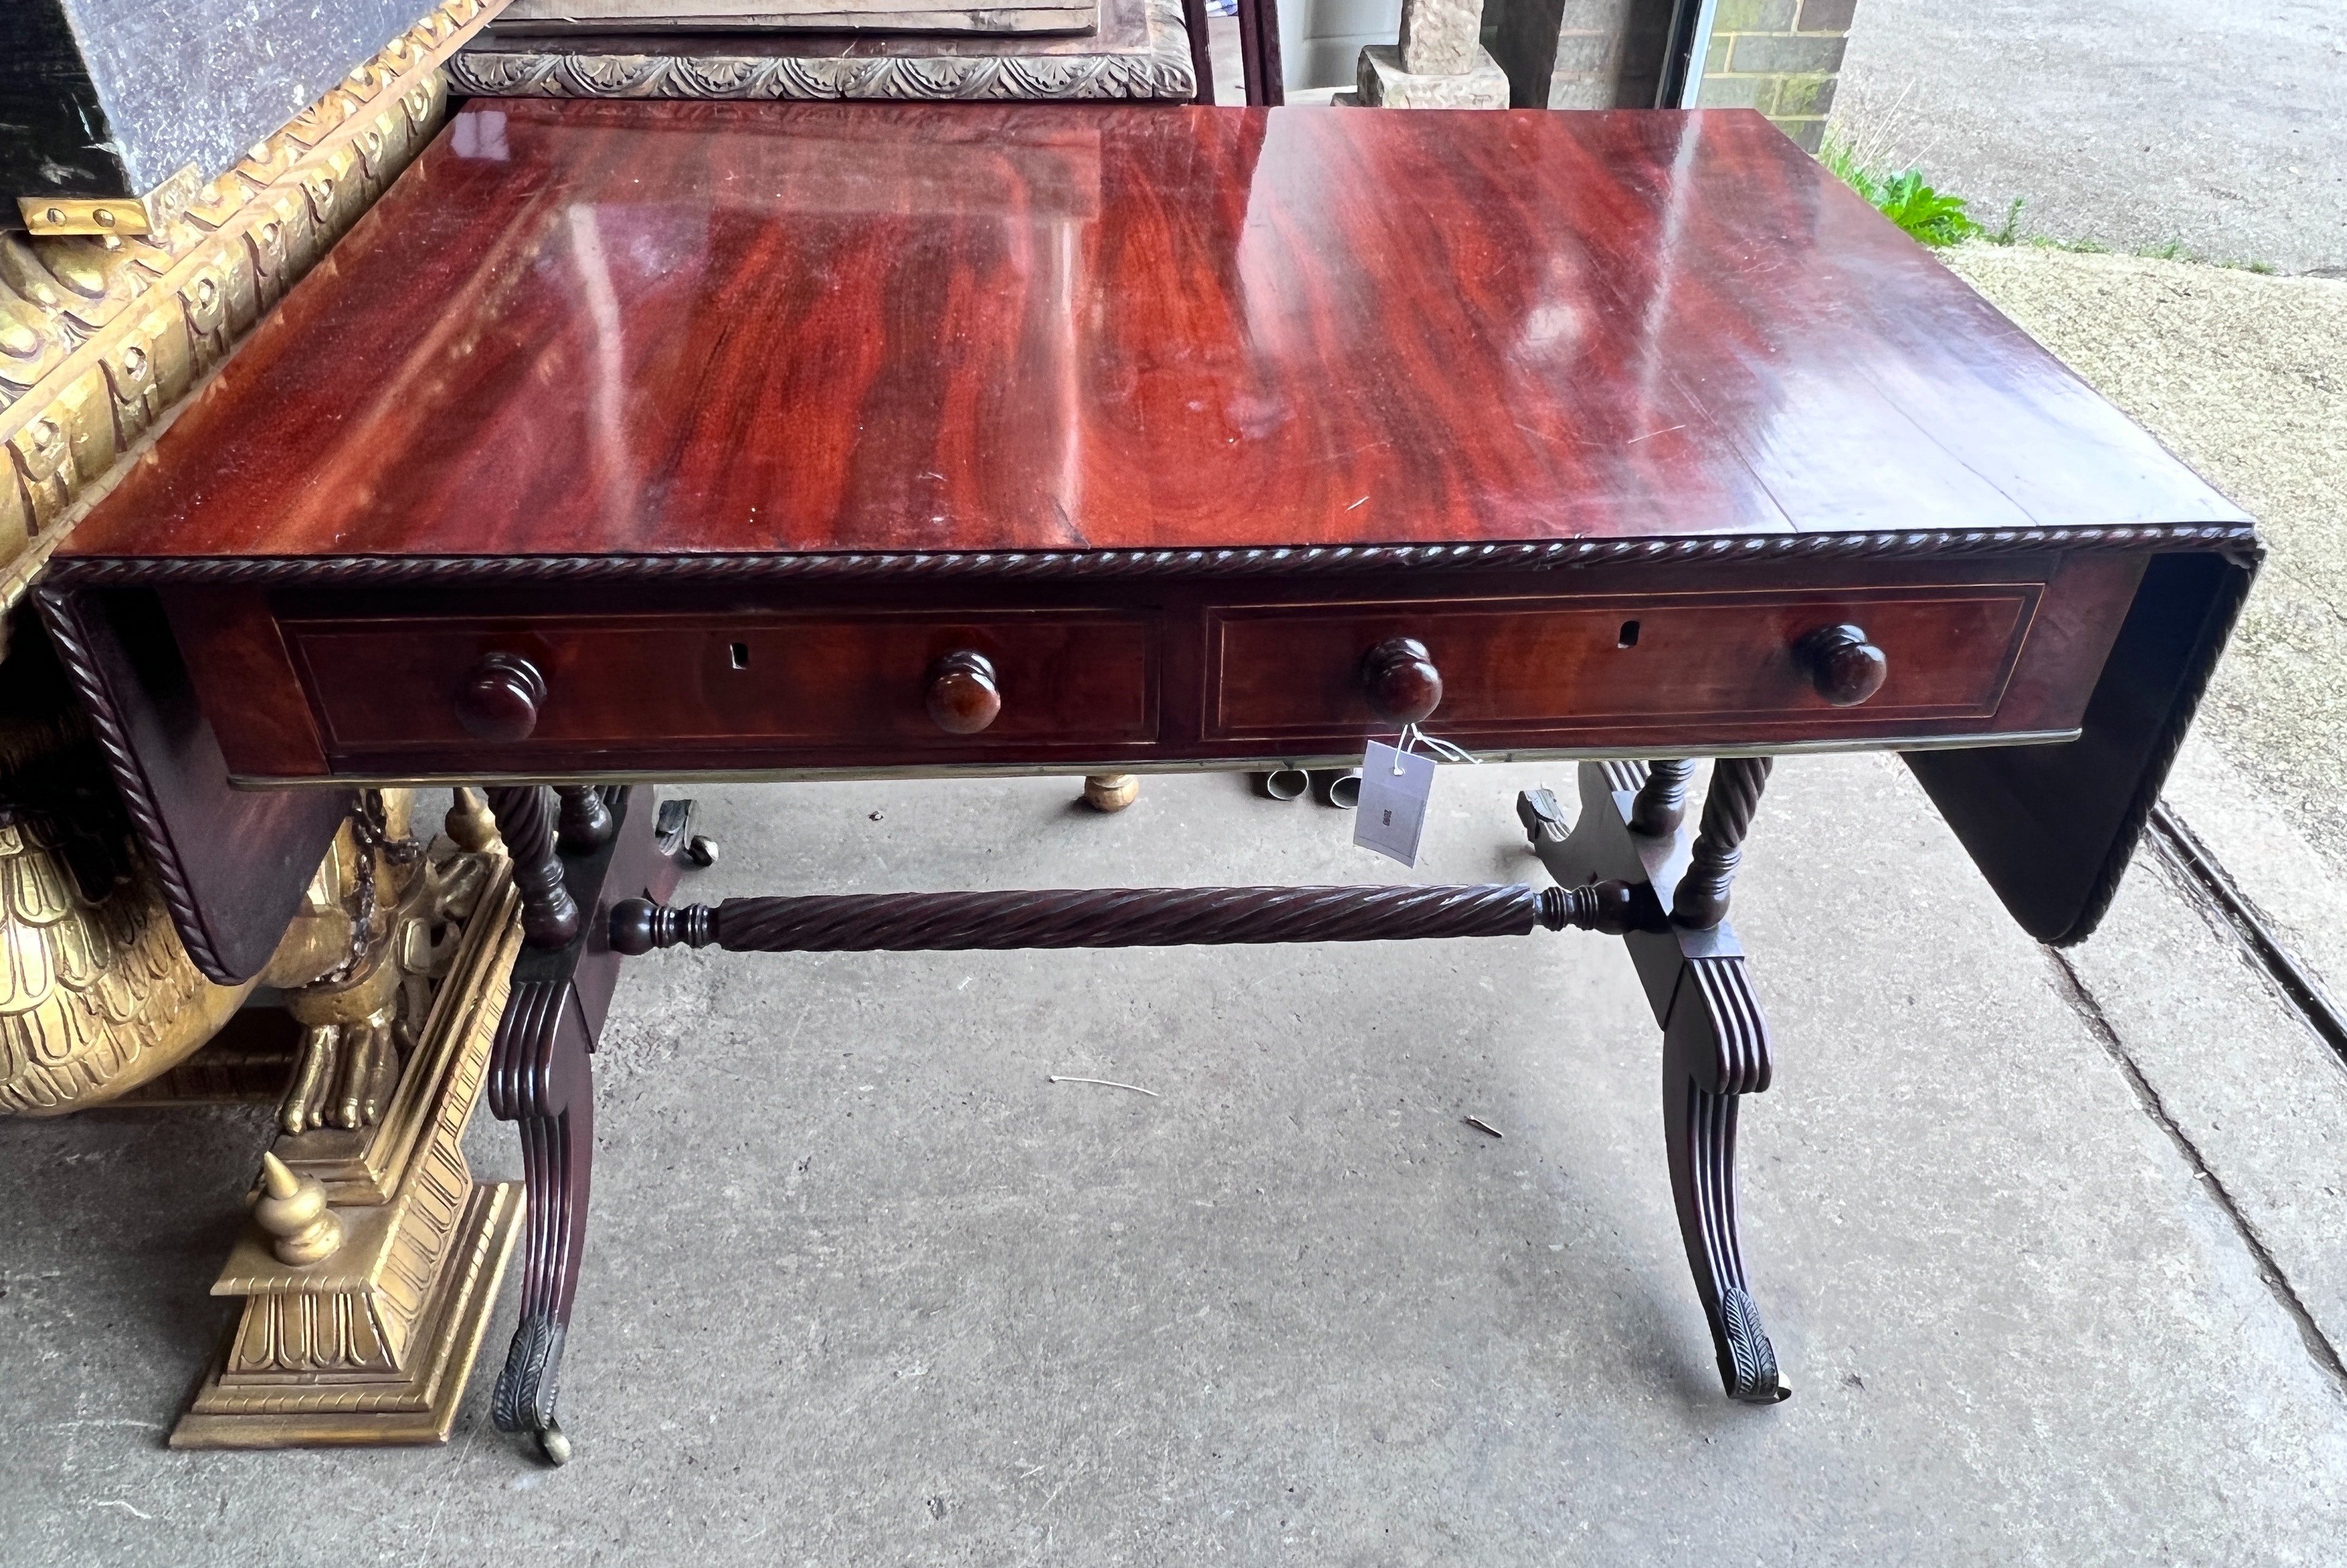 A Regency mahogany sofa table, width 100cm, depth 67cm, height 75cm